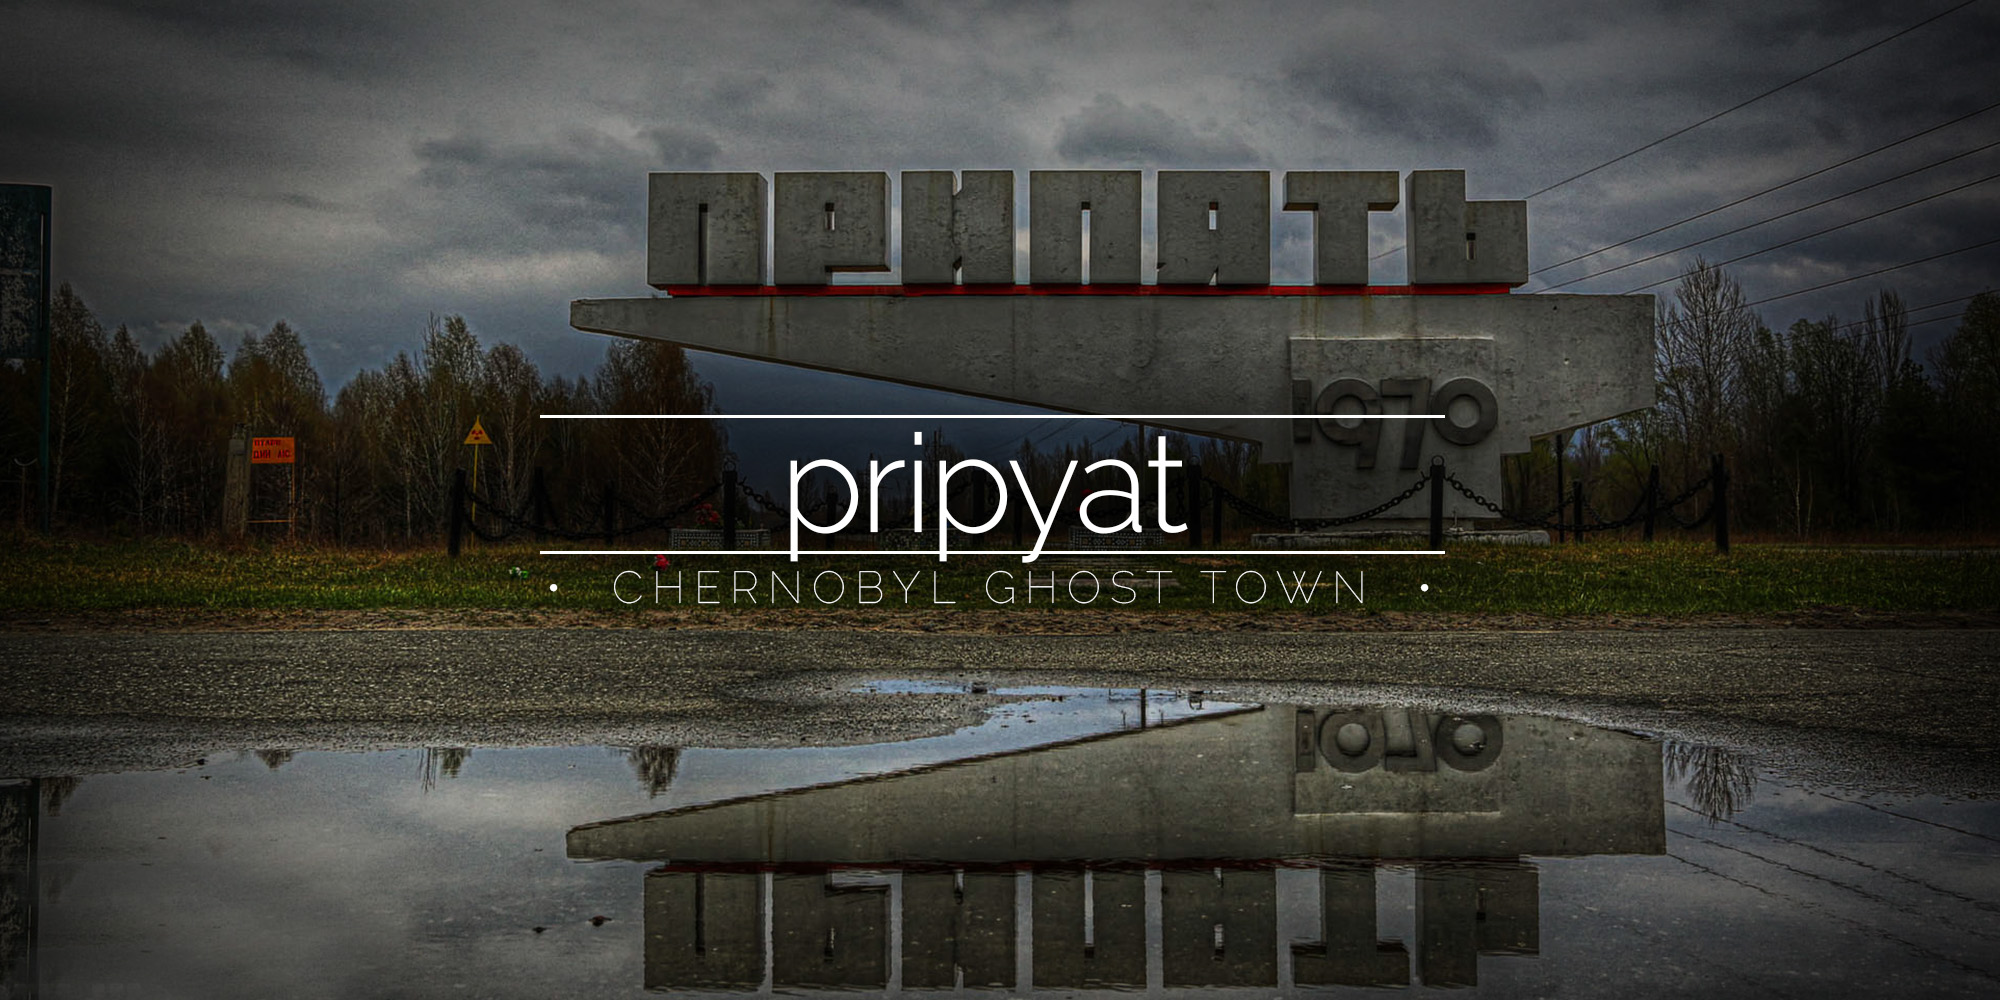 Pripyat Ghost Town, Ukraine